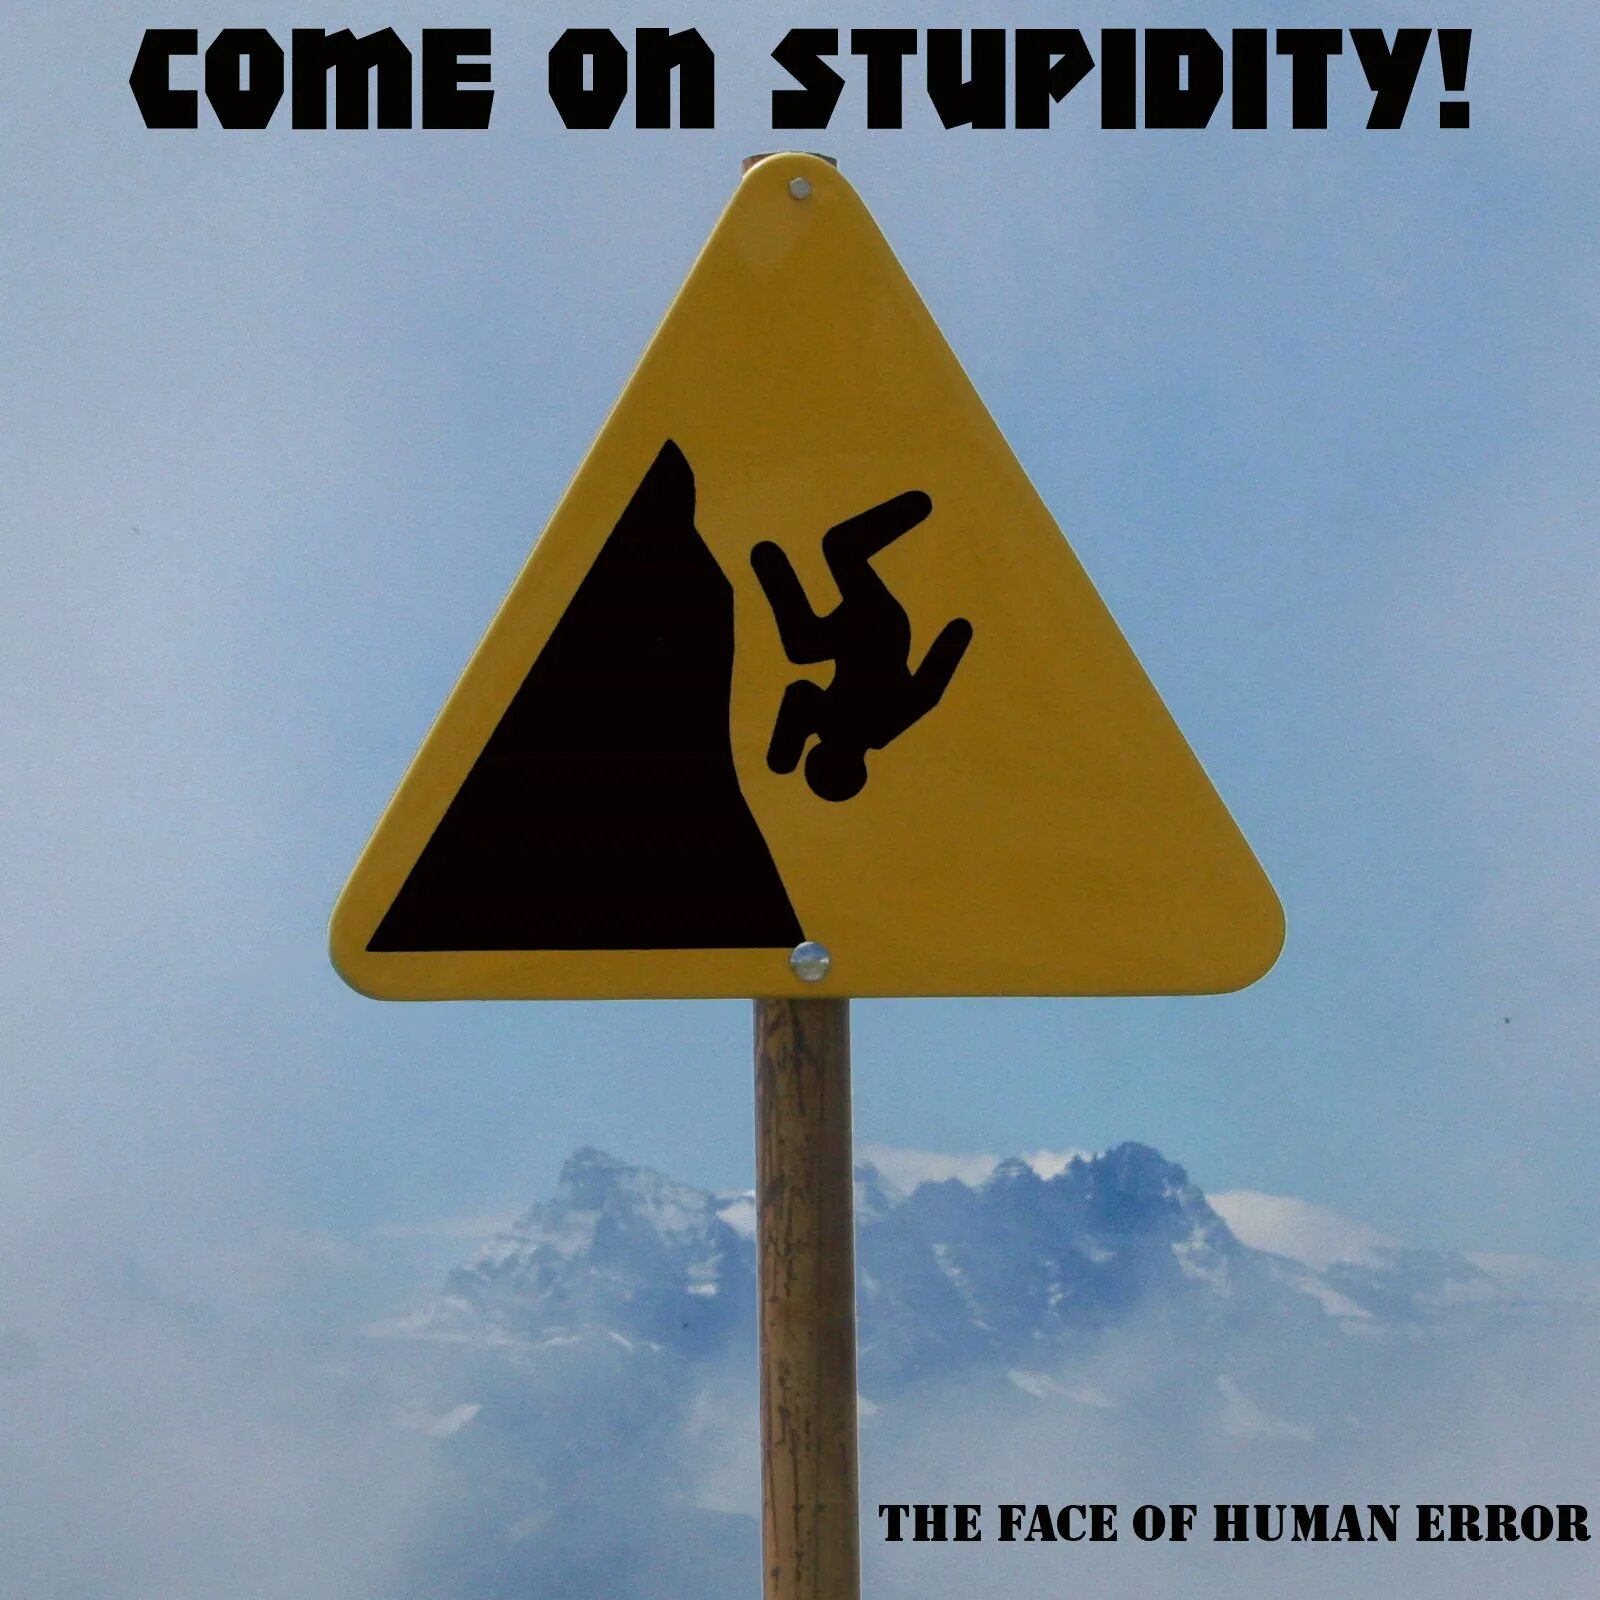 Human stupidity. It is Human Error. Human Error перевод. Human error